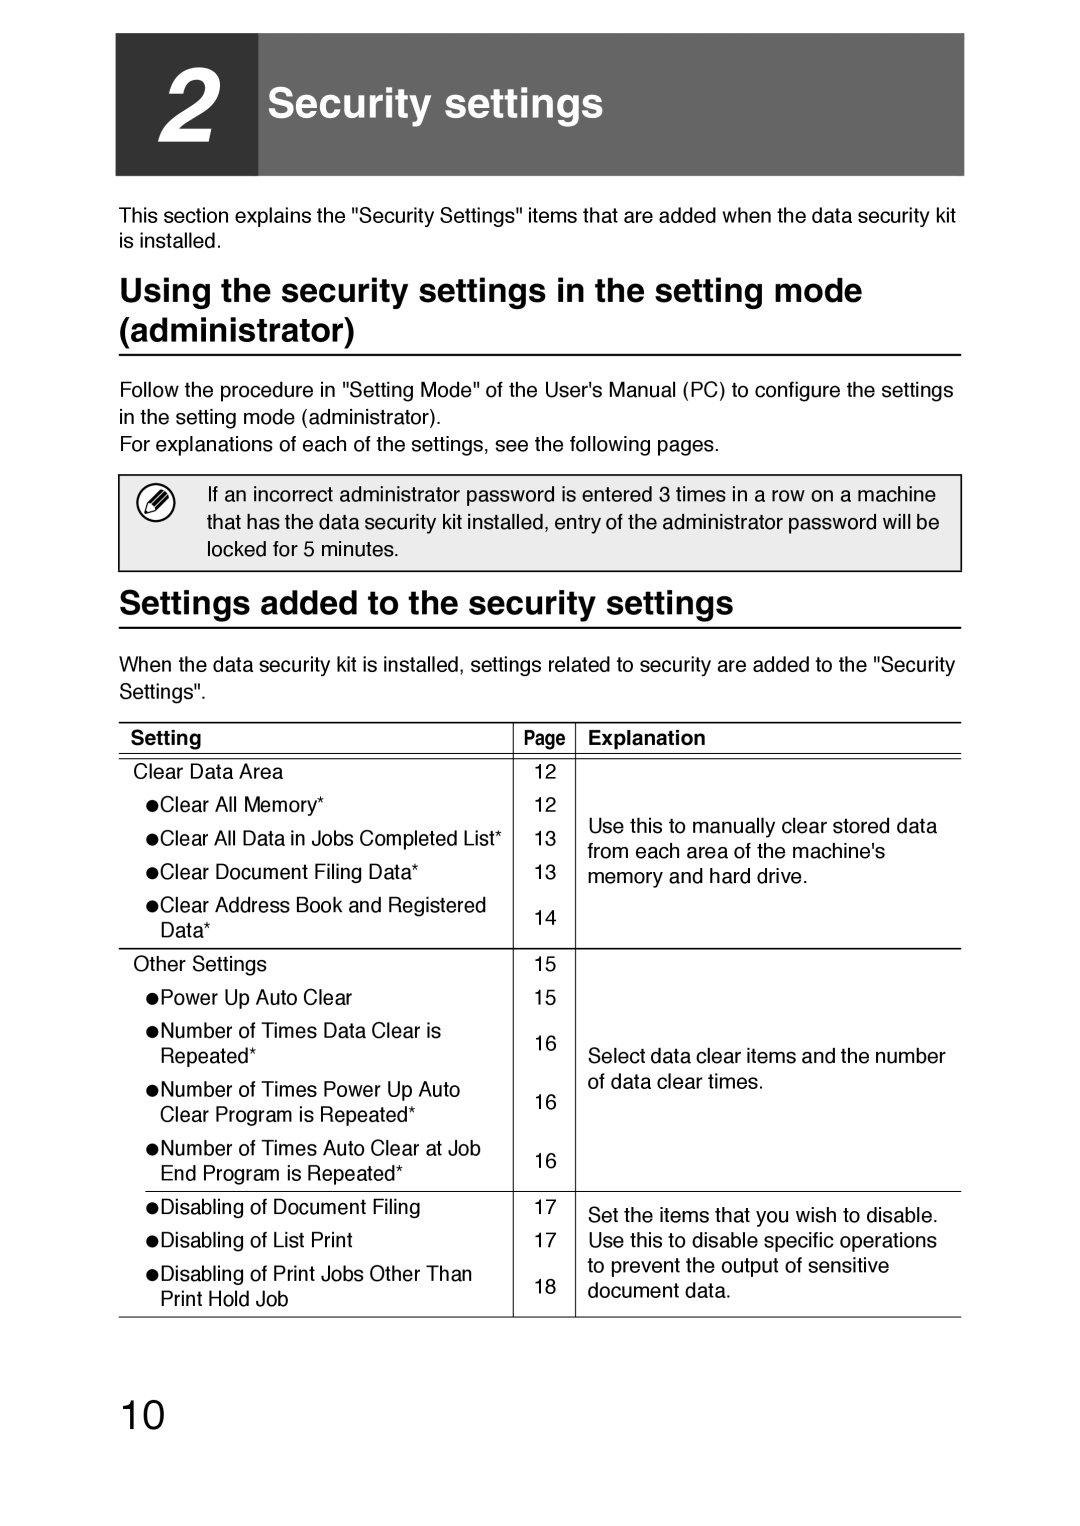 Sharp MX-FR36U manual Security settings, Settings added to the security settings 